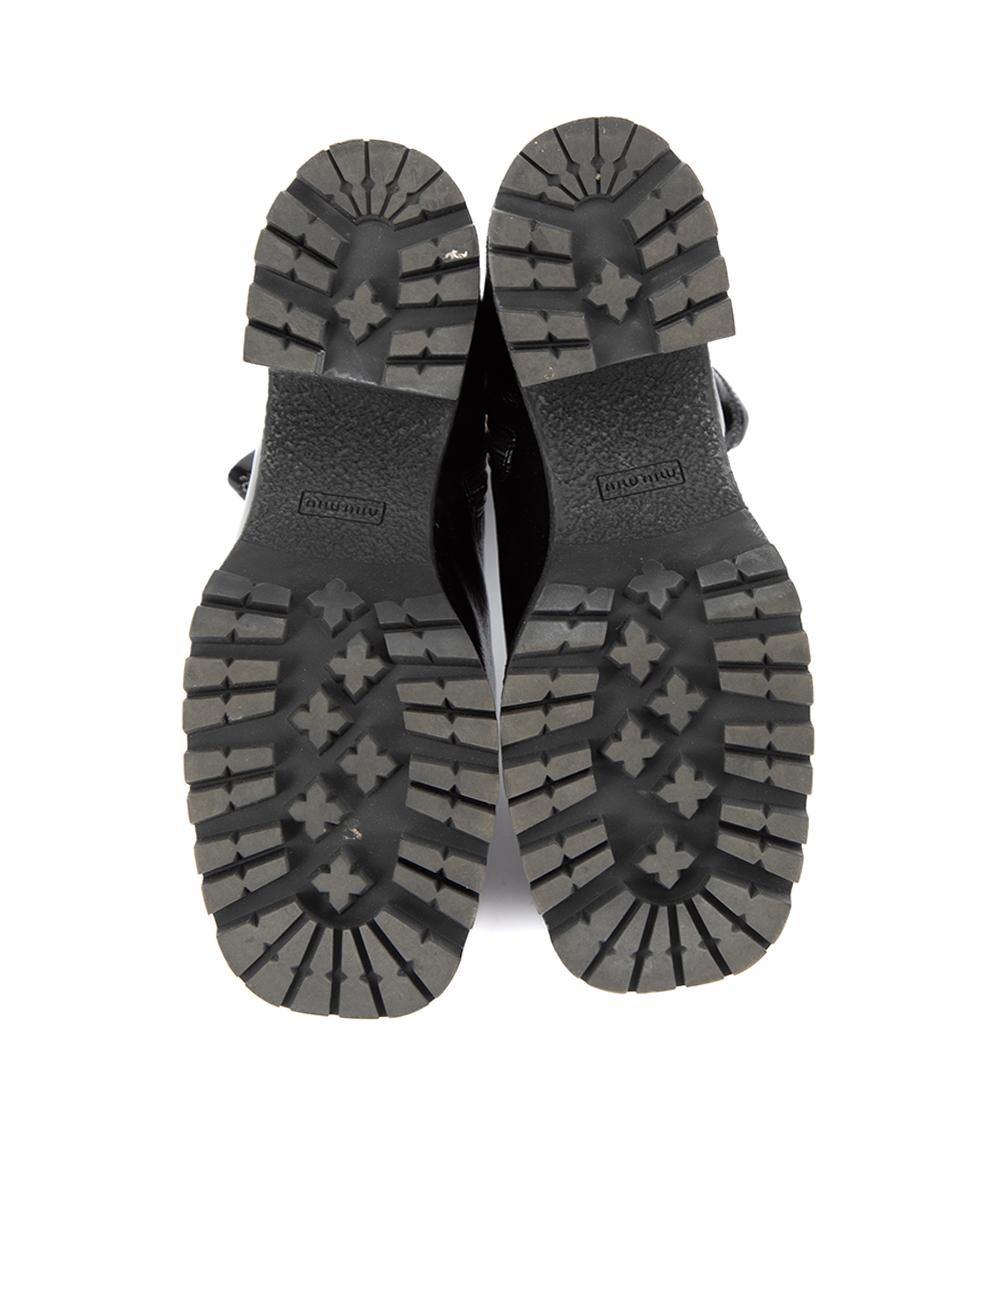 Miu Miu Women's Black Patent Leather Platform Ankle Boots For Sale 1